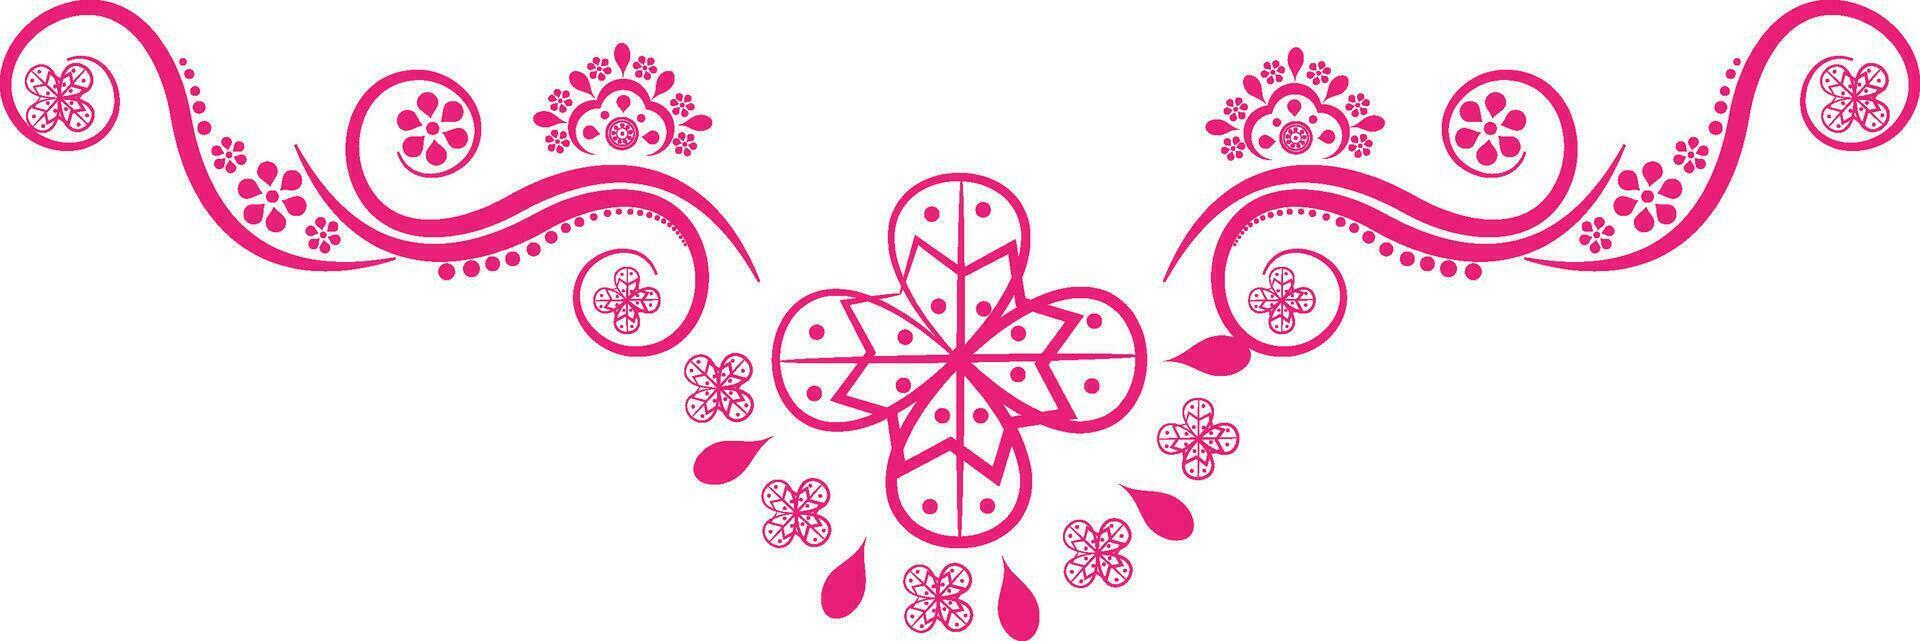 Beautiful pink floral design. vector